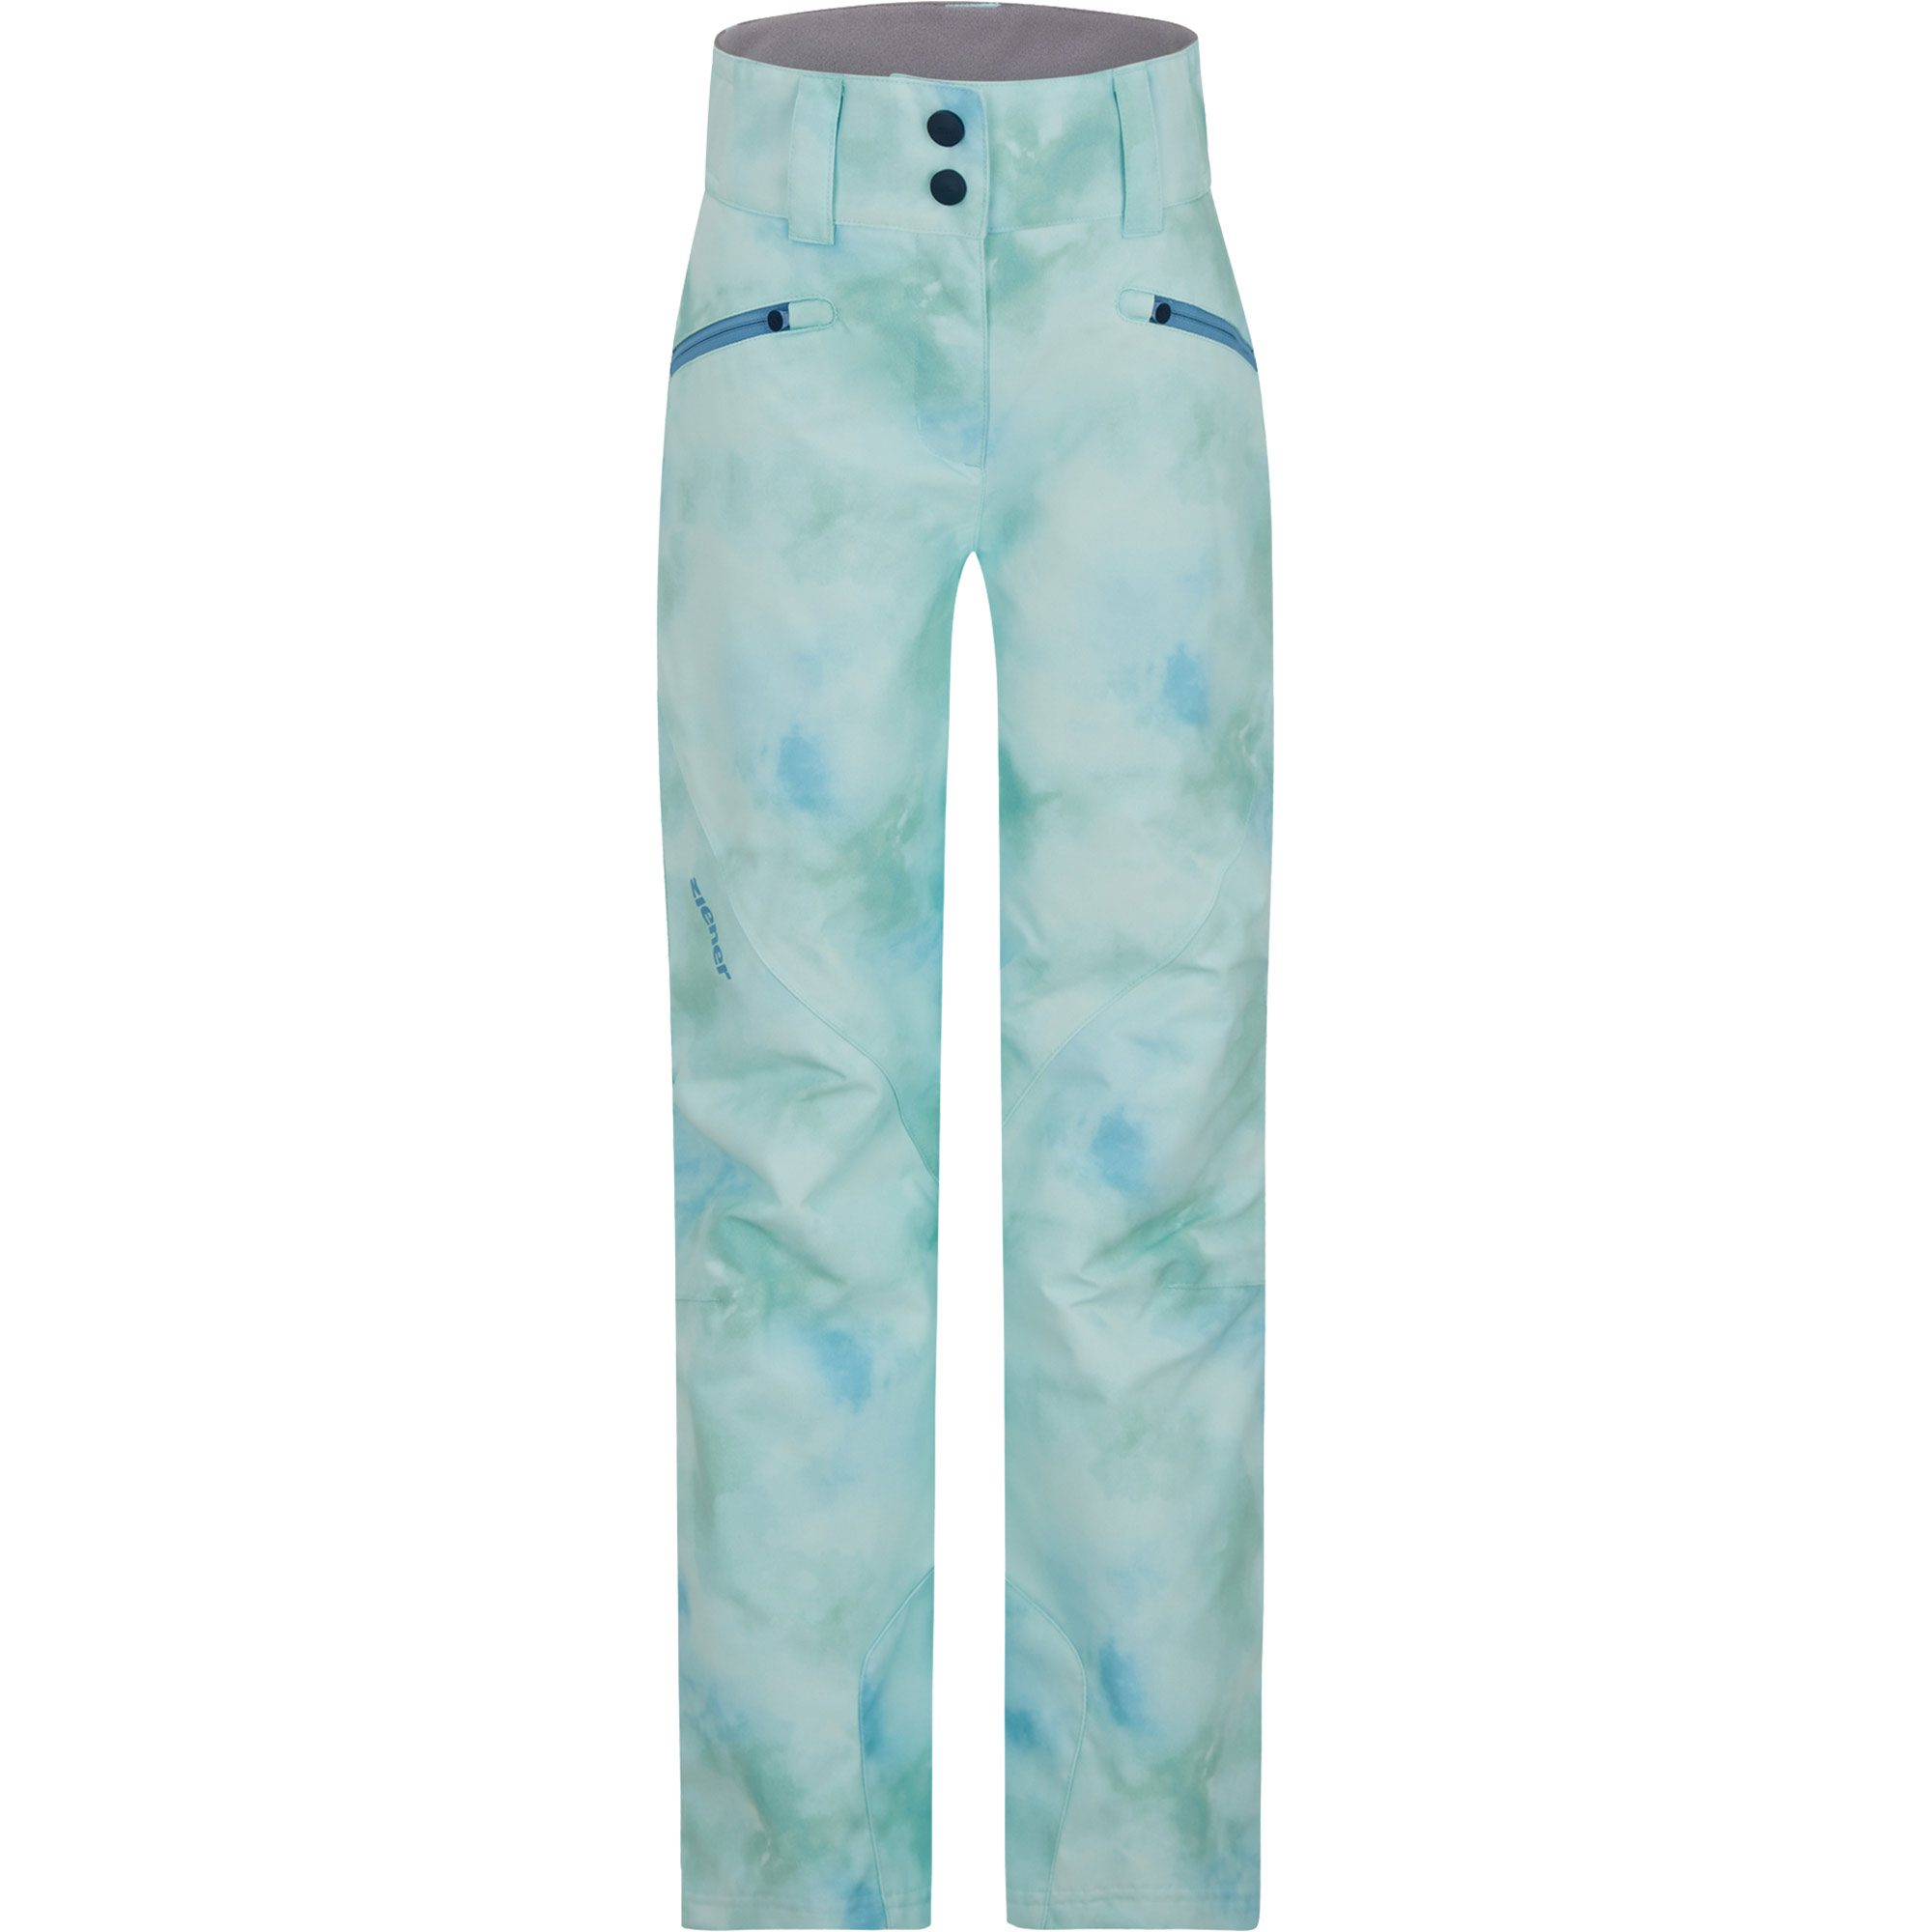 Ziener - Alin Junior Ski Pants Girls cloudy green print at Sport Bittl Shop